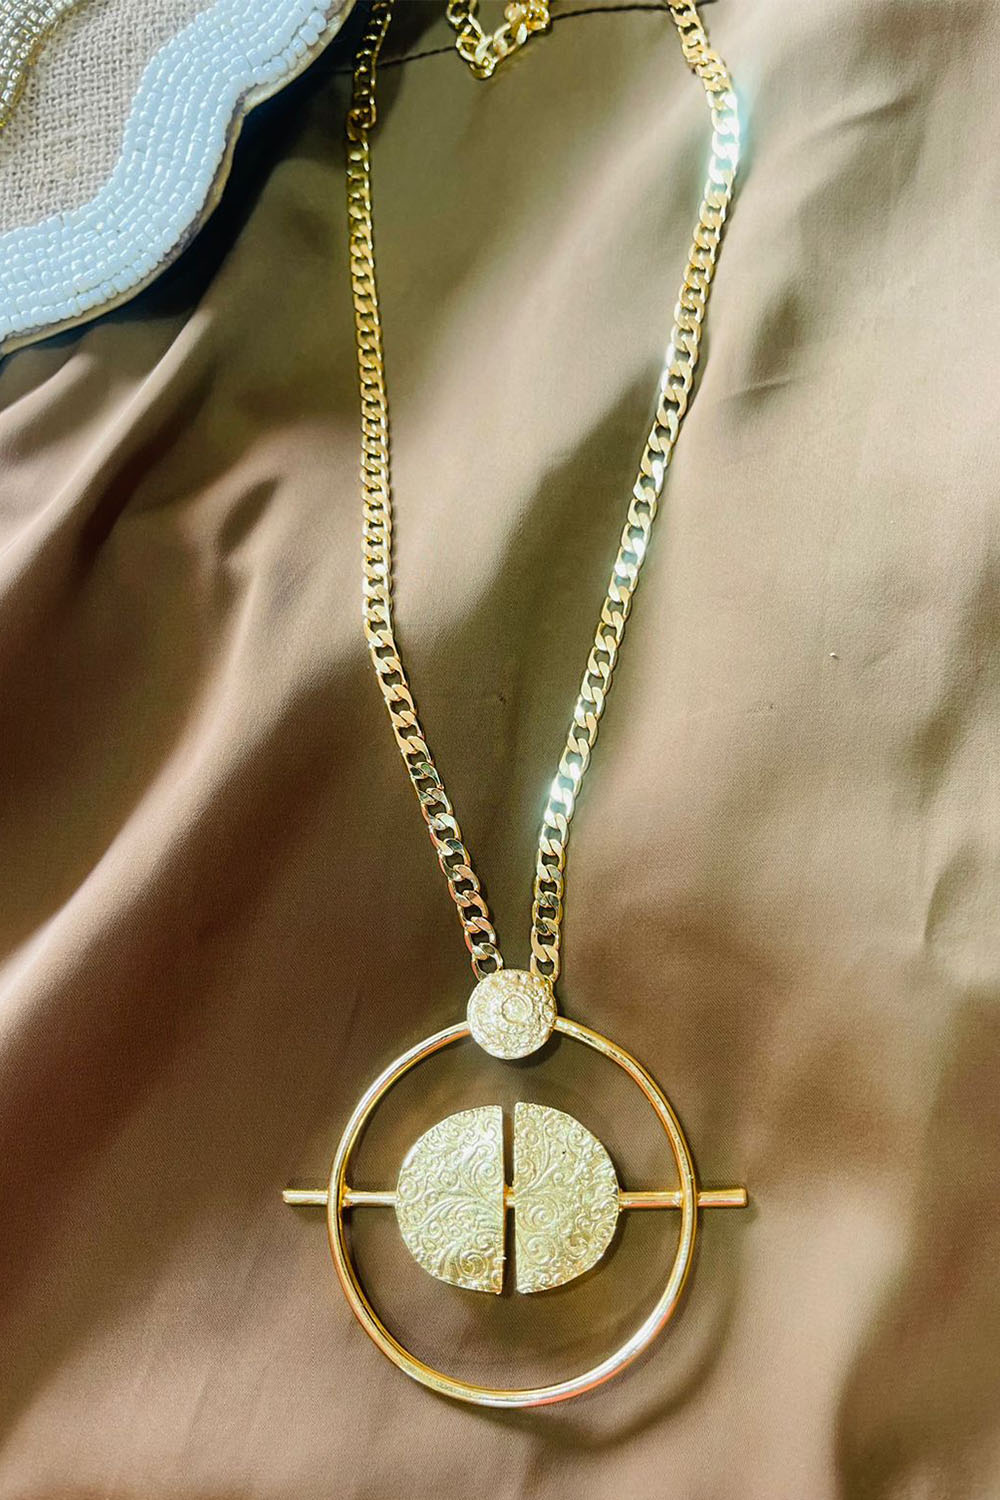 Amama,Half D shaped pendant